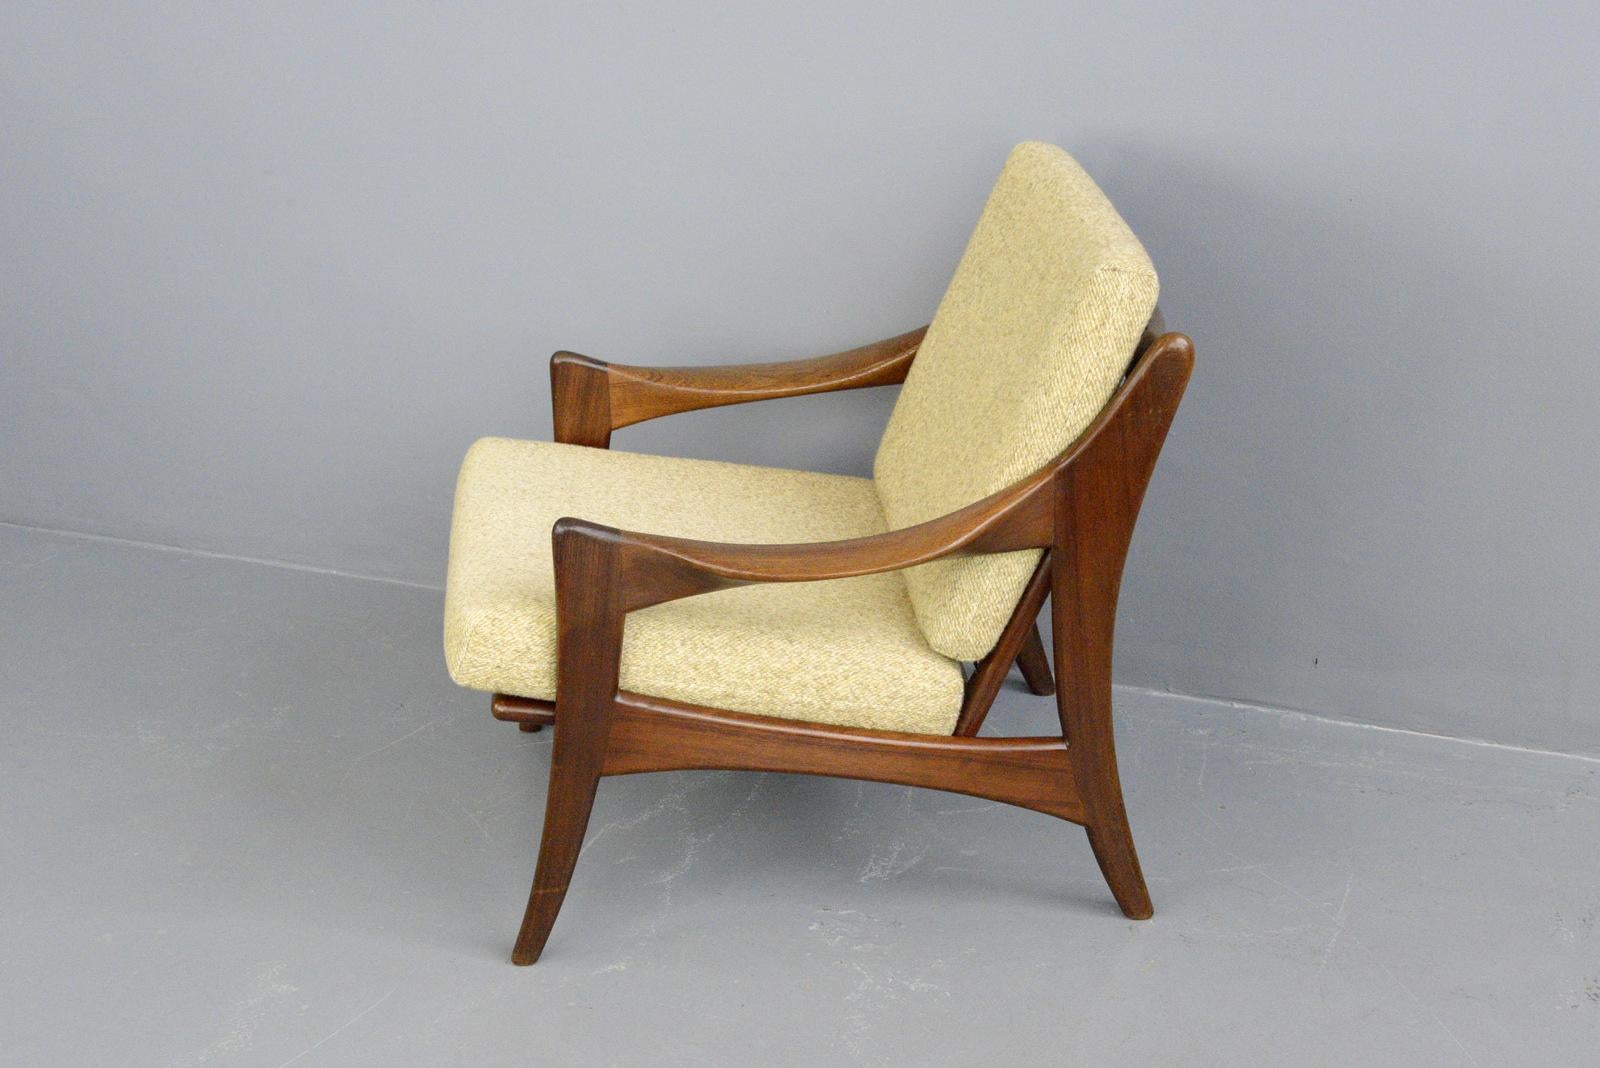 Midcentury lounge chair by Gelderland, circa 1950s

- Sculptural teak frame
- Sprung seat and backrest
- Original upholstery
- Produced by Gelderland
- Dutch, 1950s
- Measures: 72cm wide x 80cm deep x 80cm tall
- 44cm seat